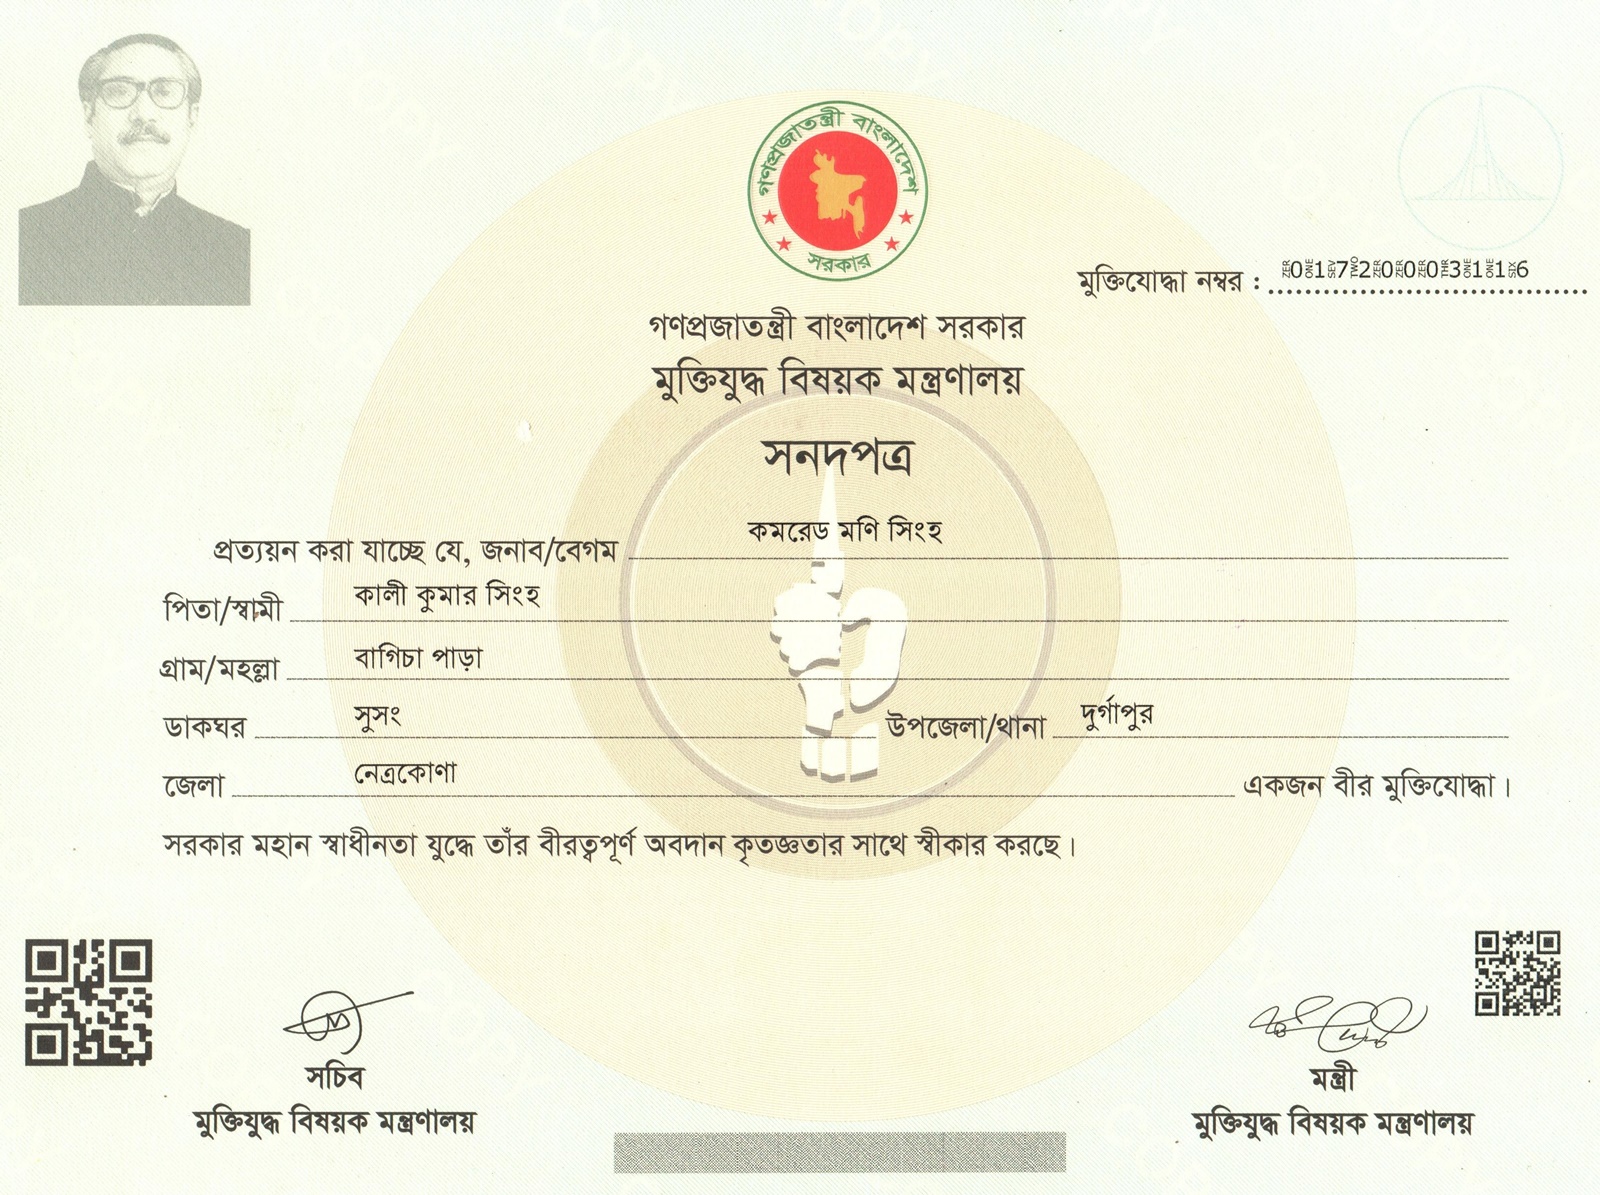 Certification of Liberal War 1971 of Comrade Moni Singh